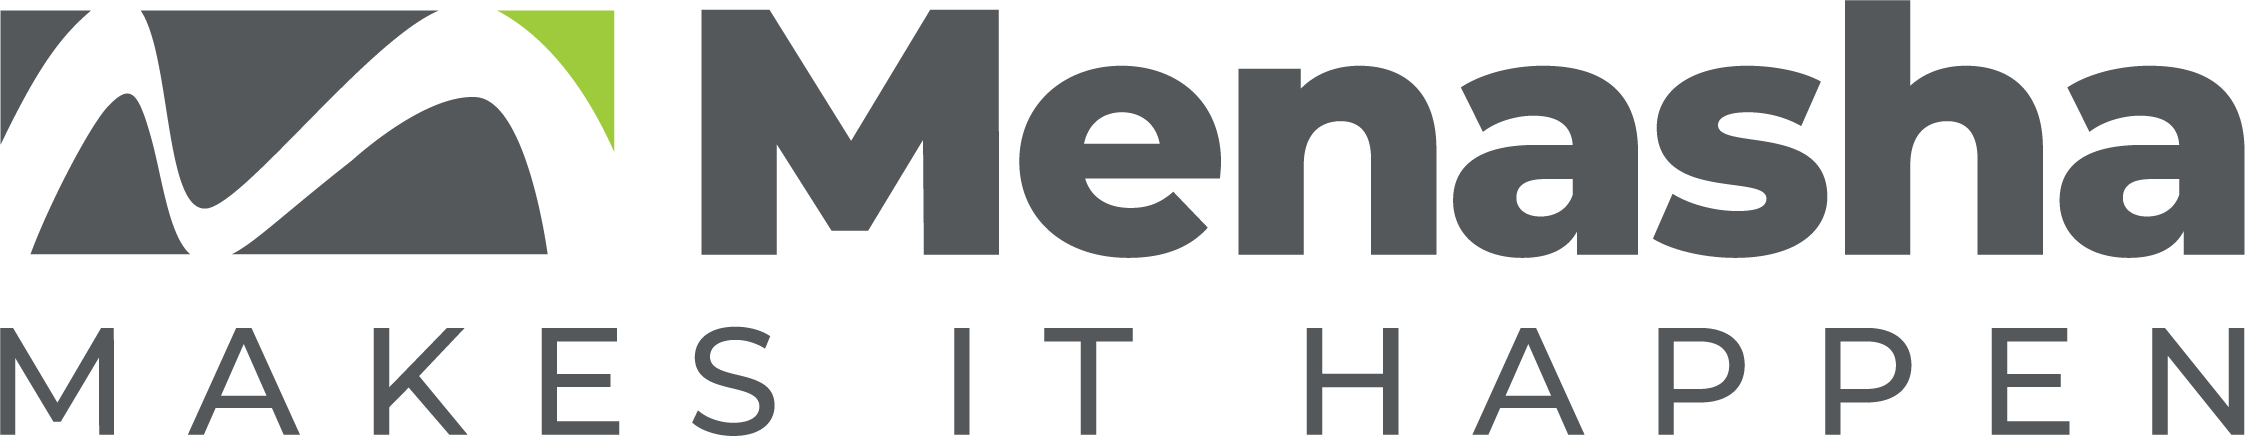 Menasha-Logo